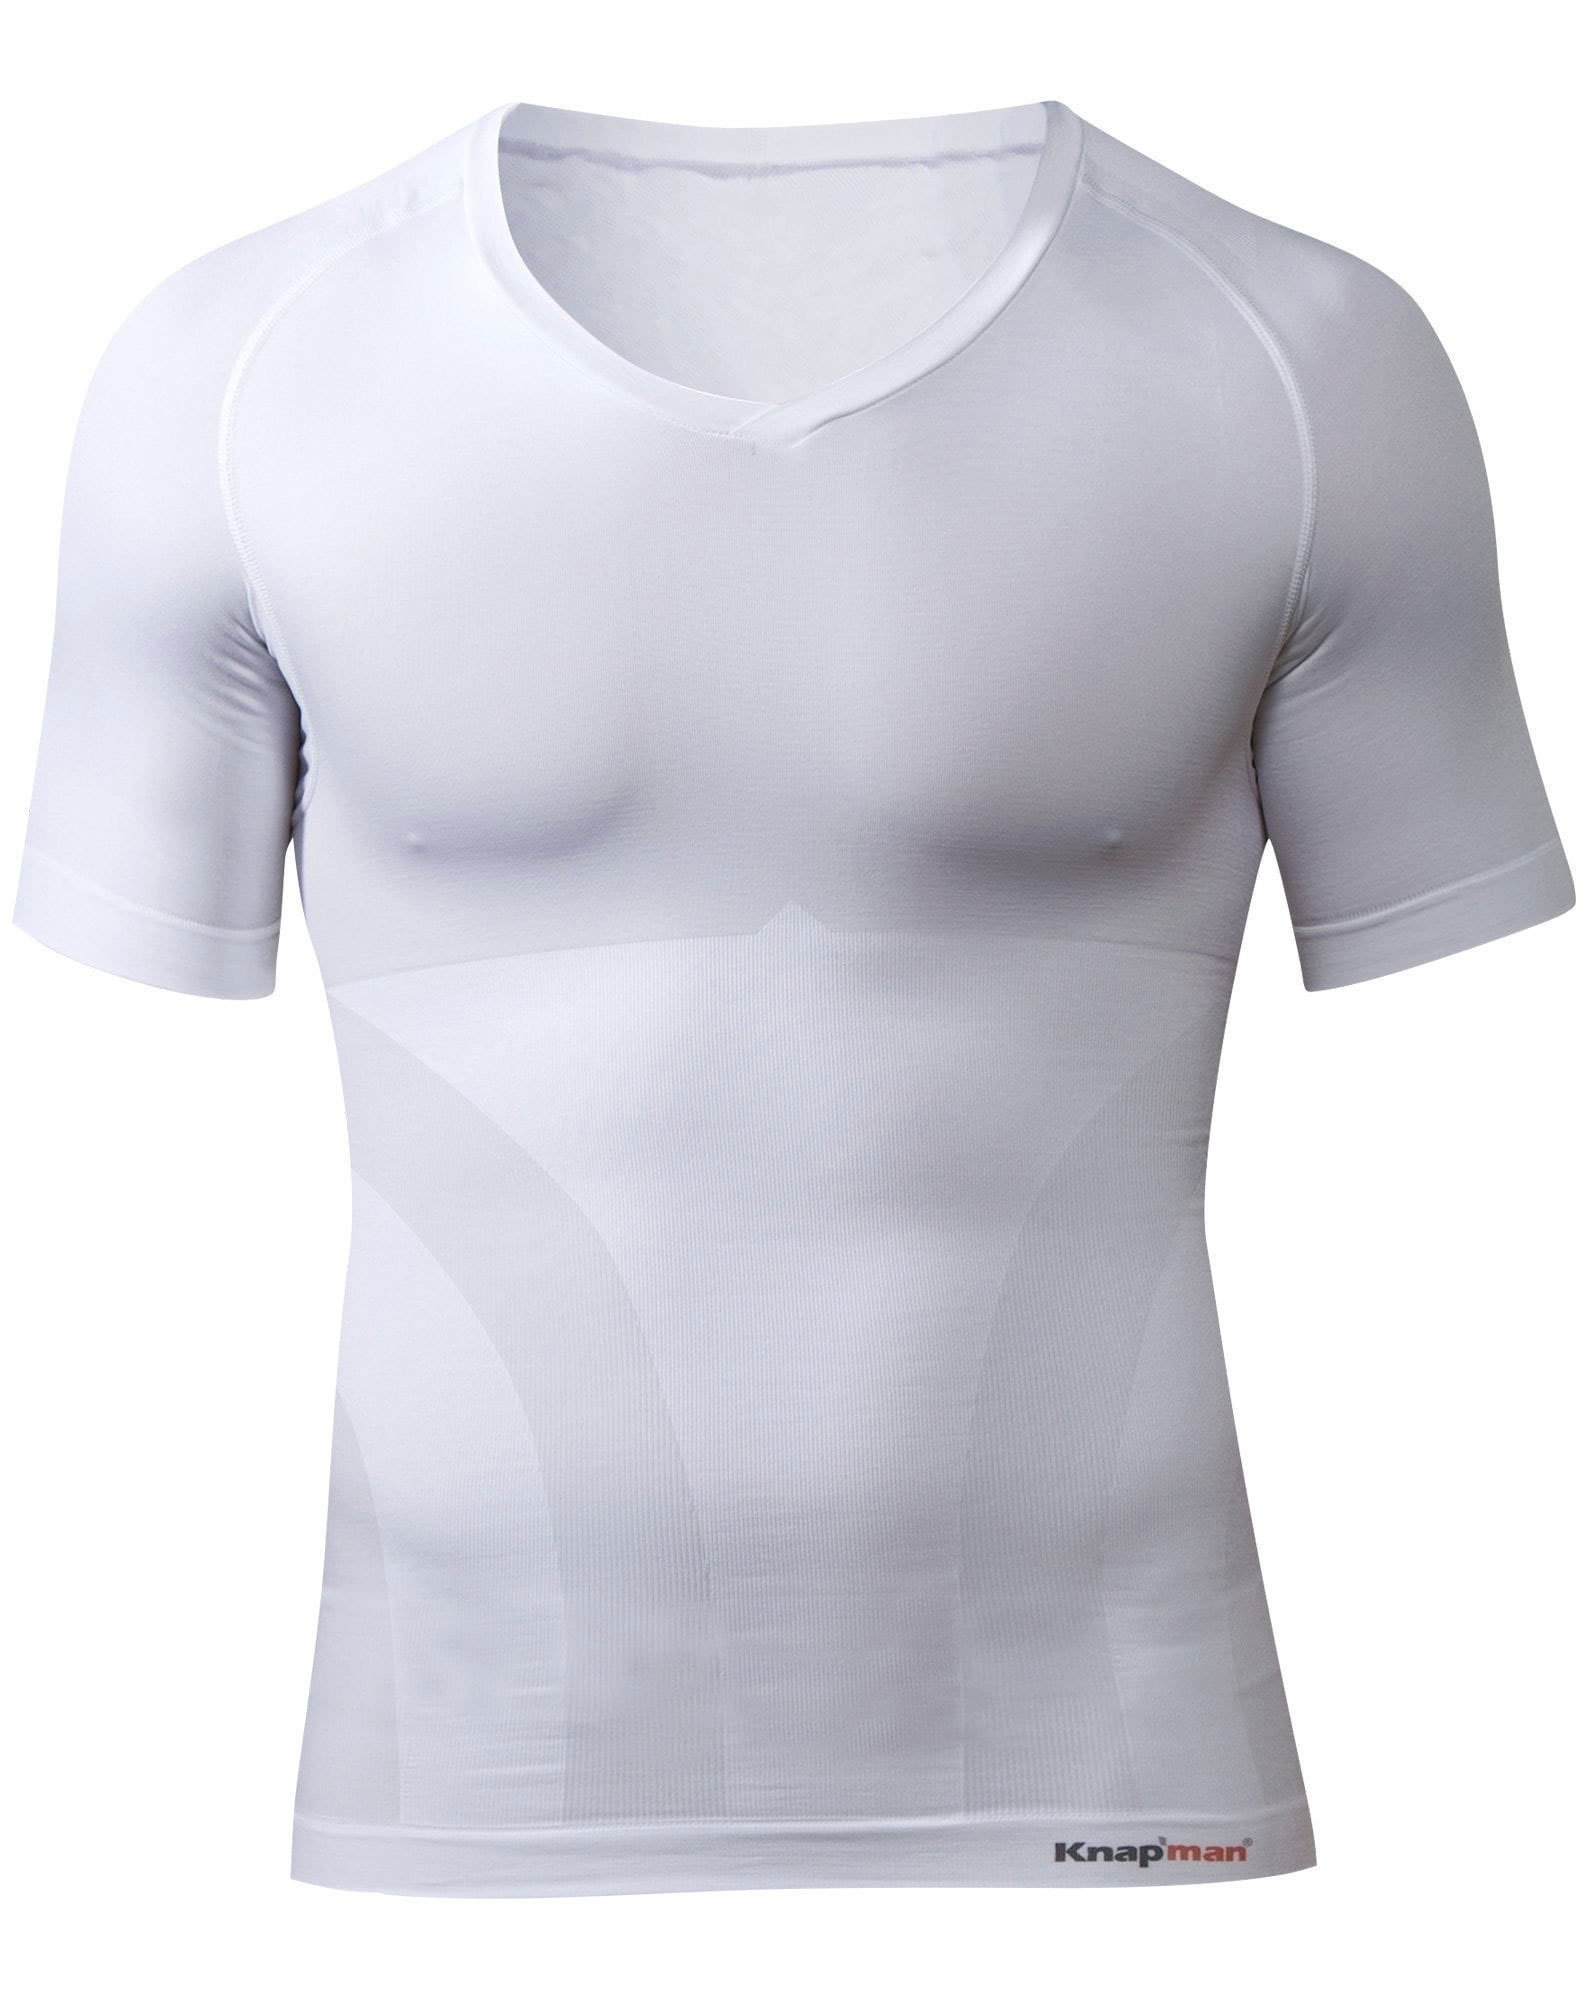 Harmonisch Nationale volkstelling Vermoorden Knap'man | Online Shop | Knap'man Zoned Cotton Comfort V-hals shirt wit